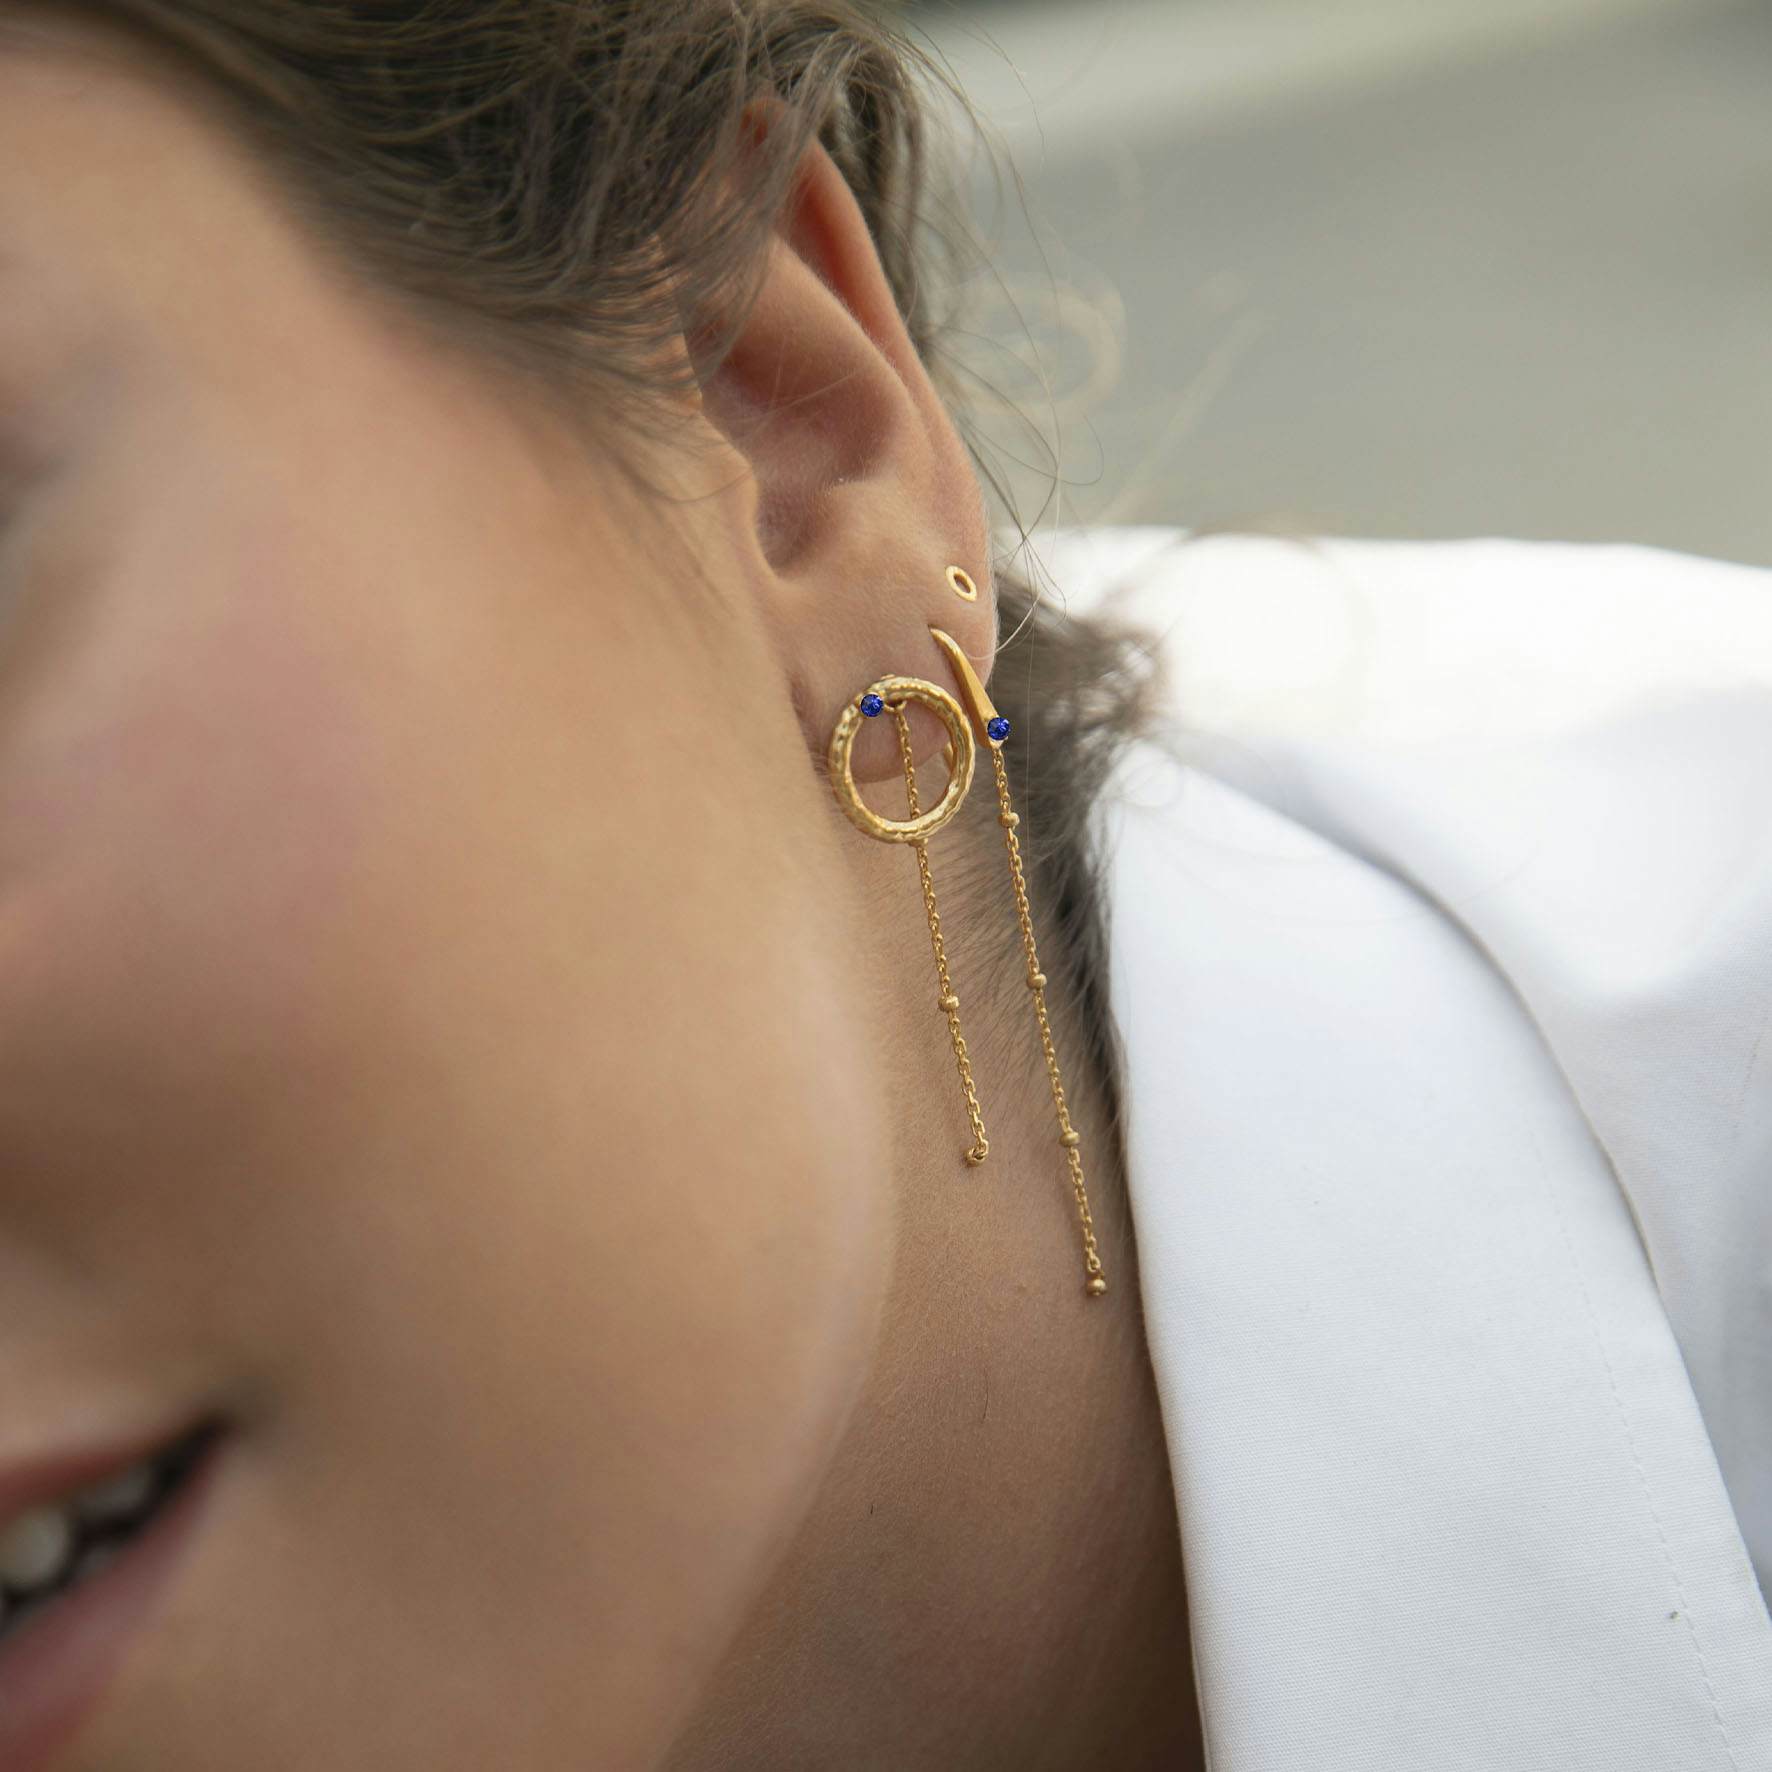 Anabel By Sistie Earrings from Sistie in Goldplated-Silver Sterling 925